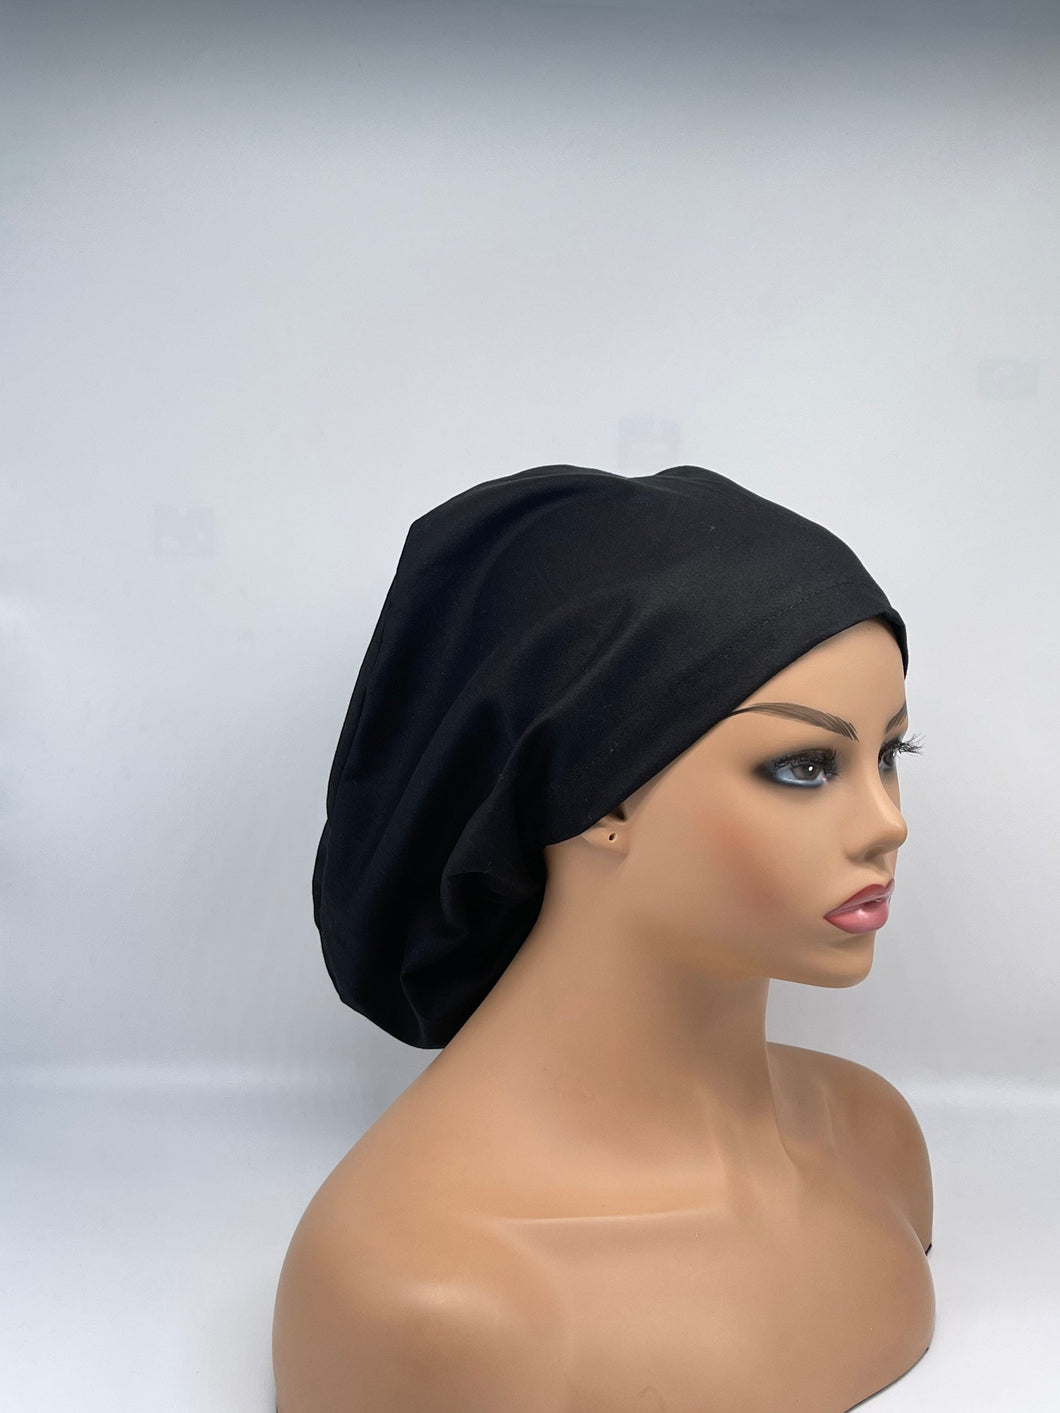 Niceroy BLACK EUROPE STYLE surgical scrub hat nursing caps cotton fabric hat with satin lining option